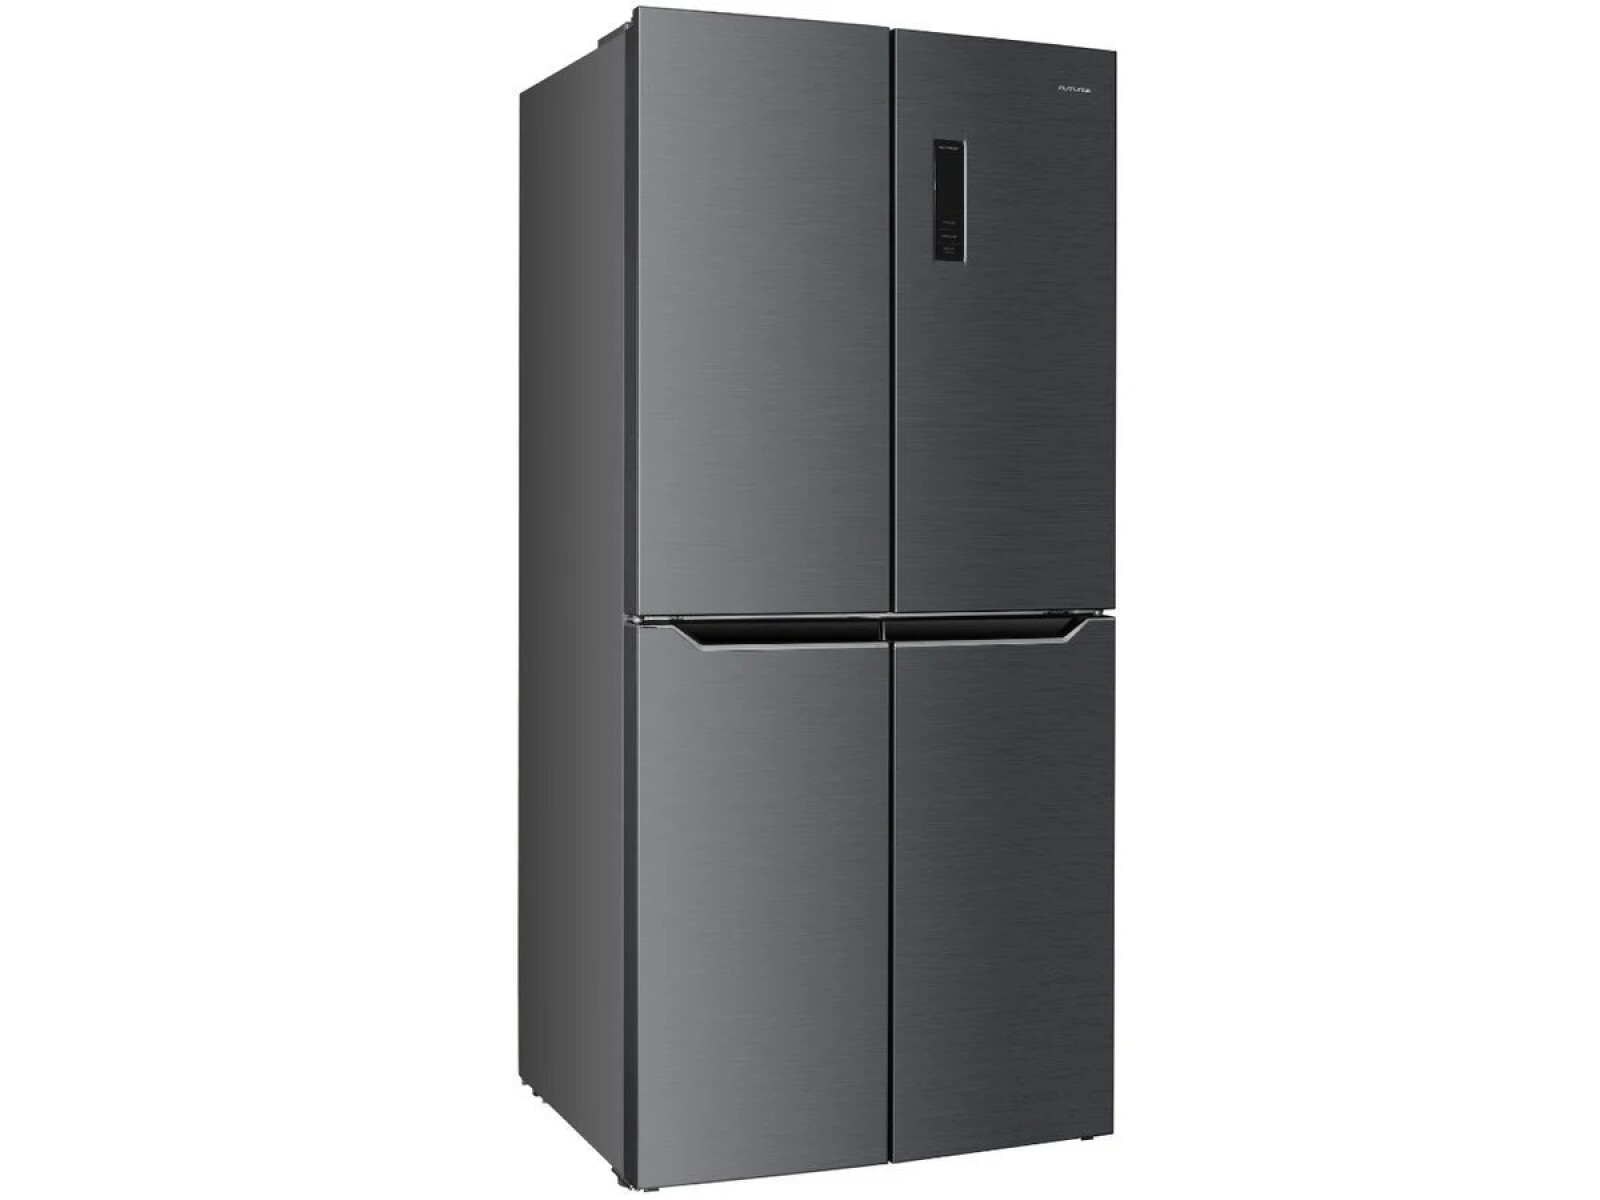 Refrigerador Futura 4 puertas 472 litros 